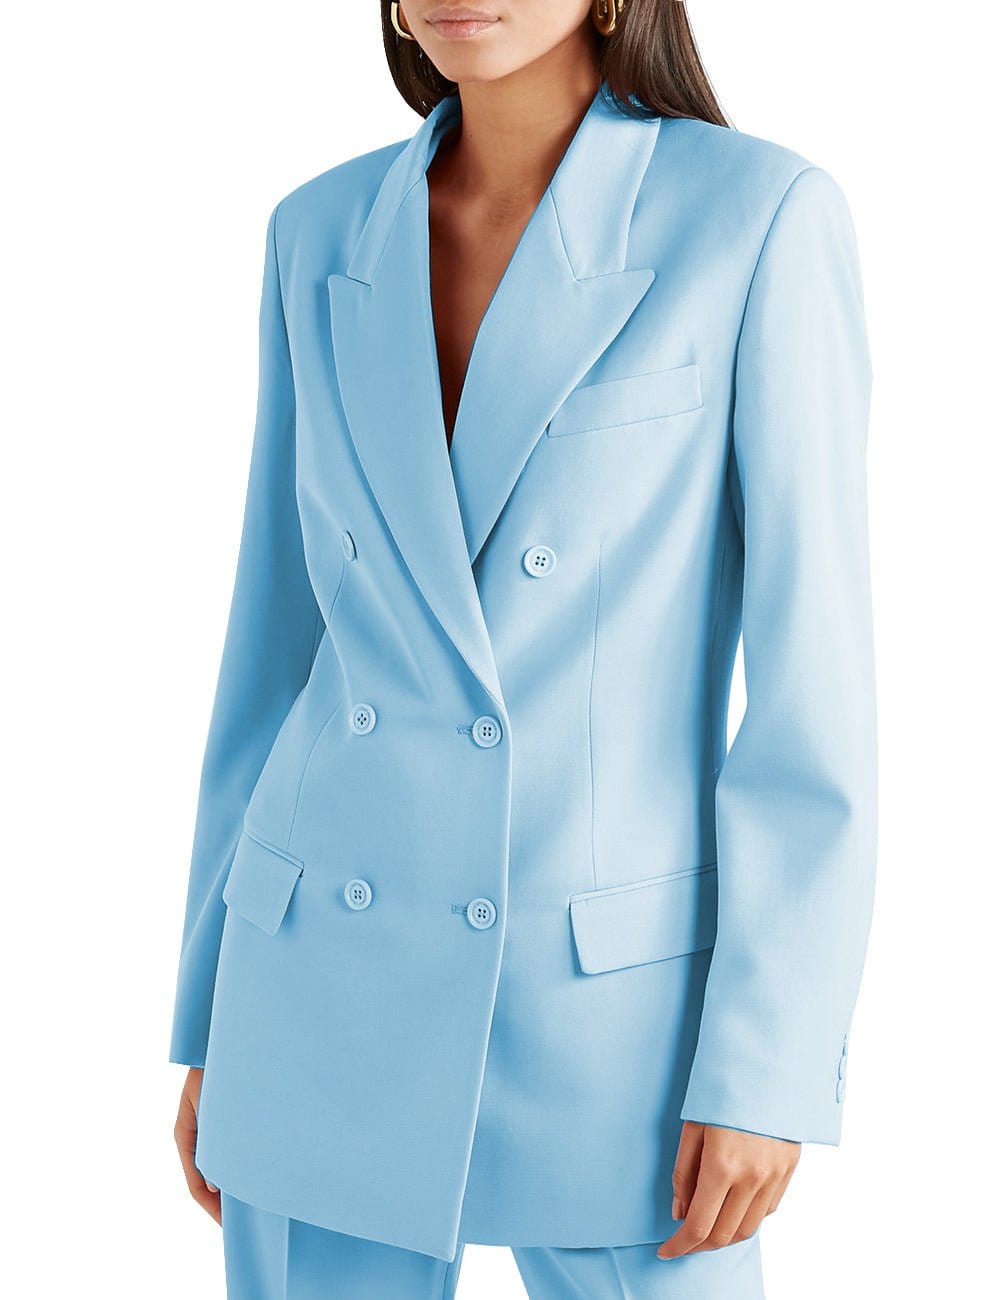 solovedress Women's Leisure 2 Pieces Double Breasted Solid Color Peak Lapel Suit (Blazer+Pants)